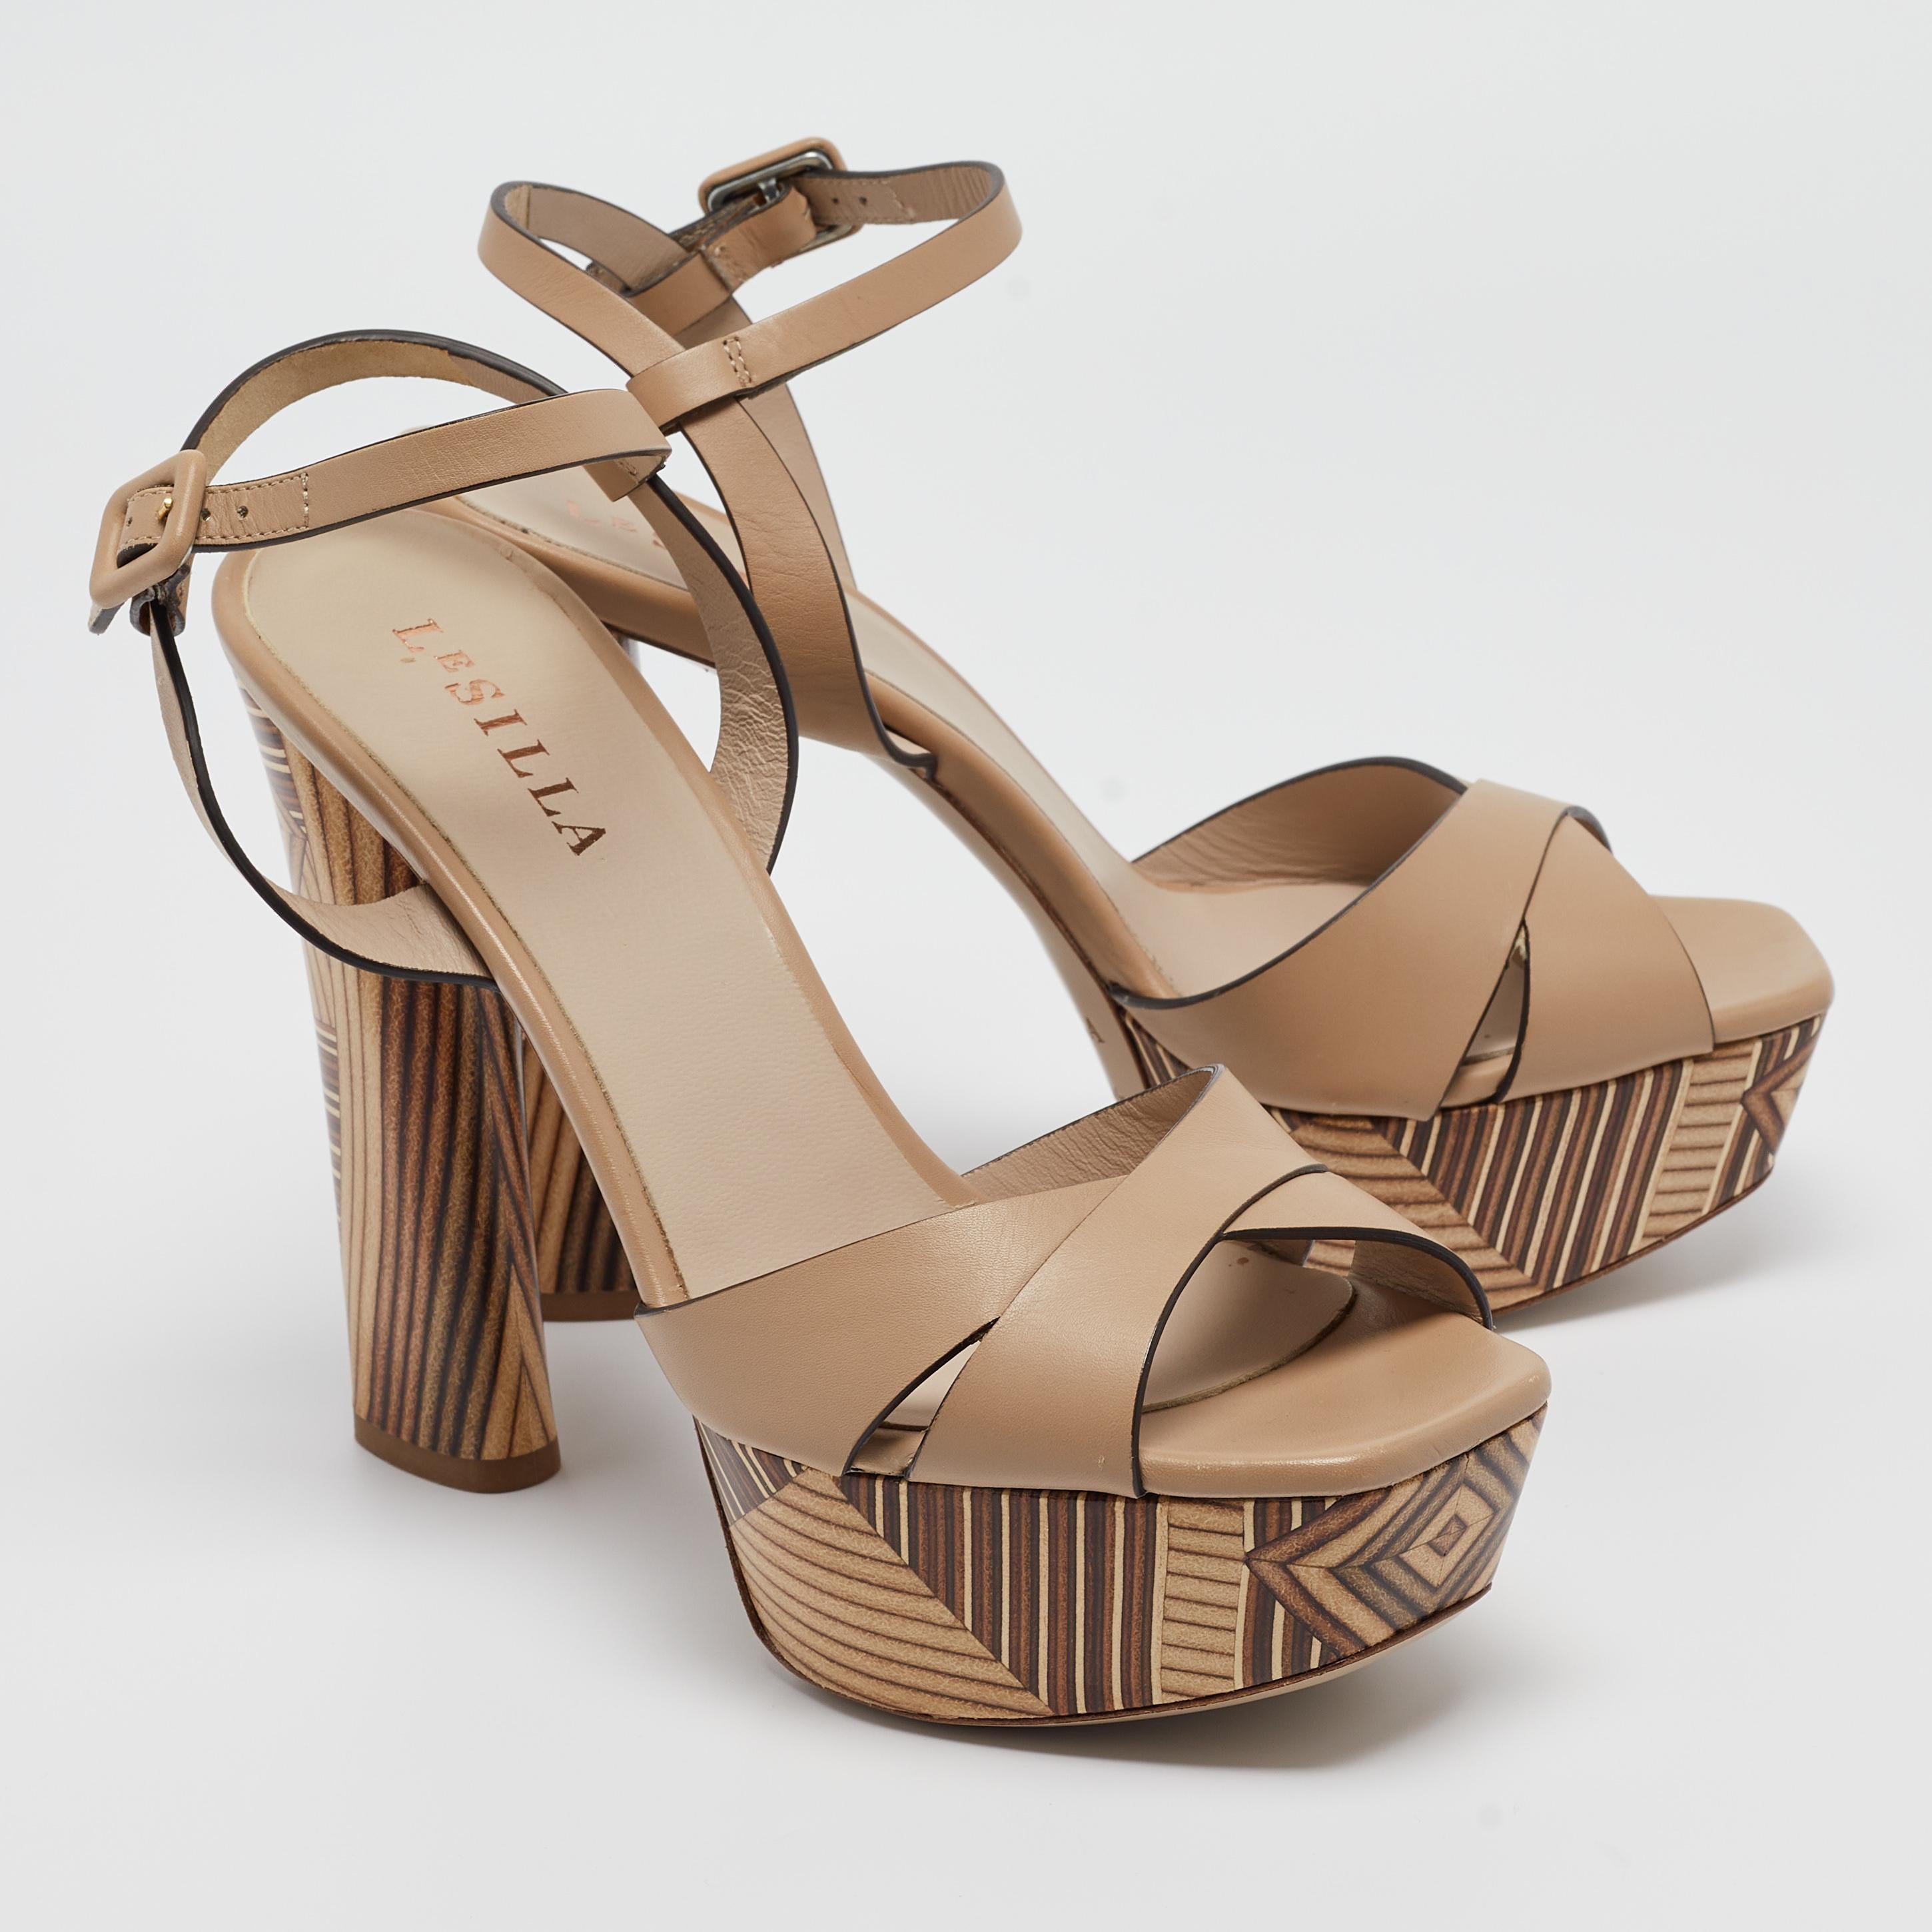 Le Silla Beige Leather Ankle Platform Ankle Strap Sandals Size 39 For Sale 1